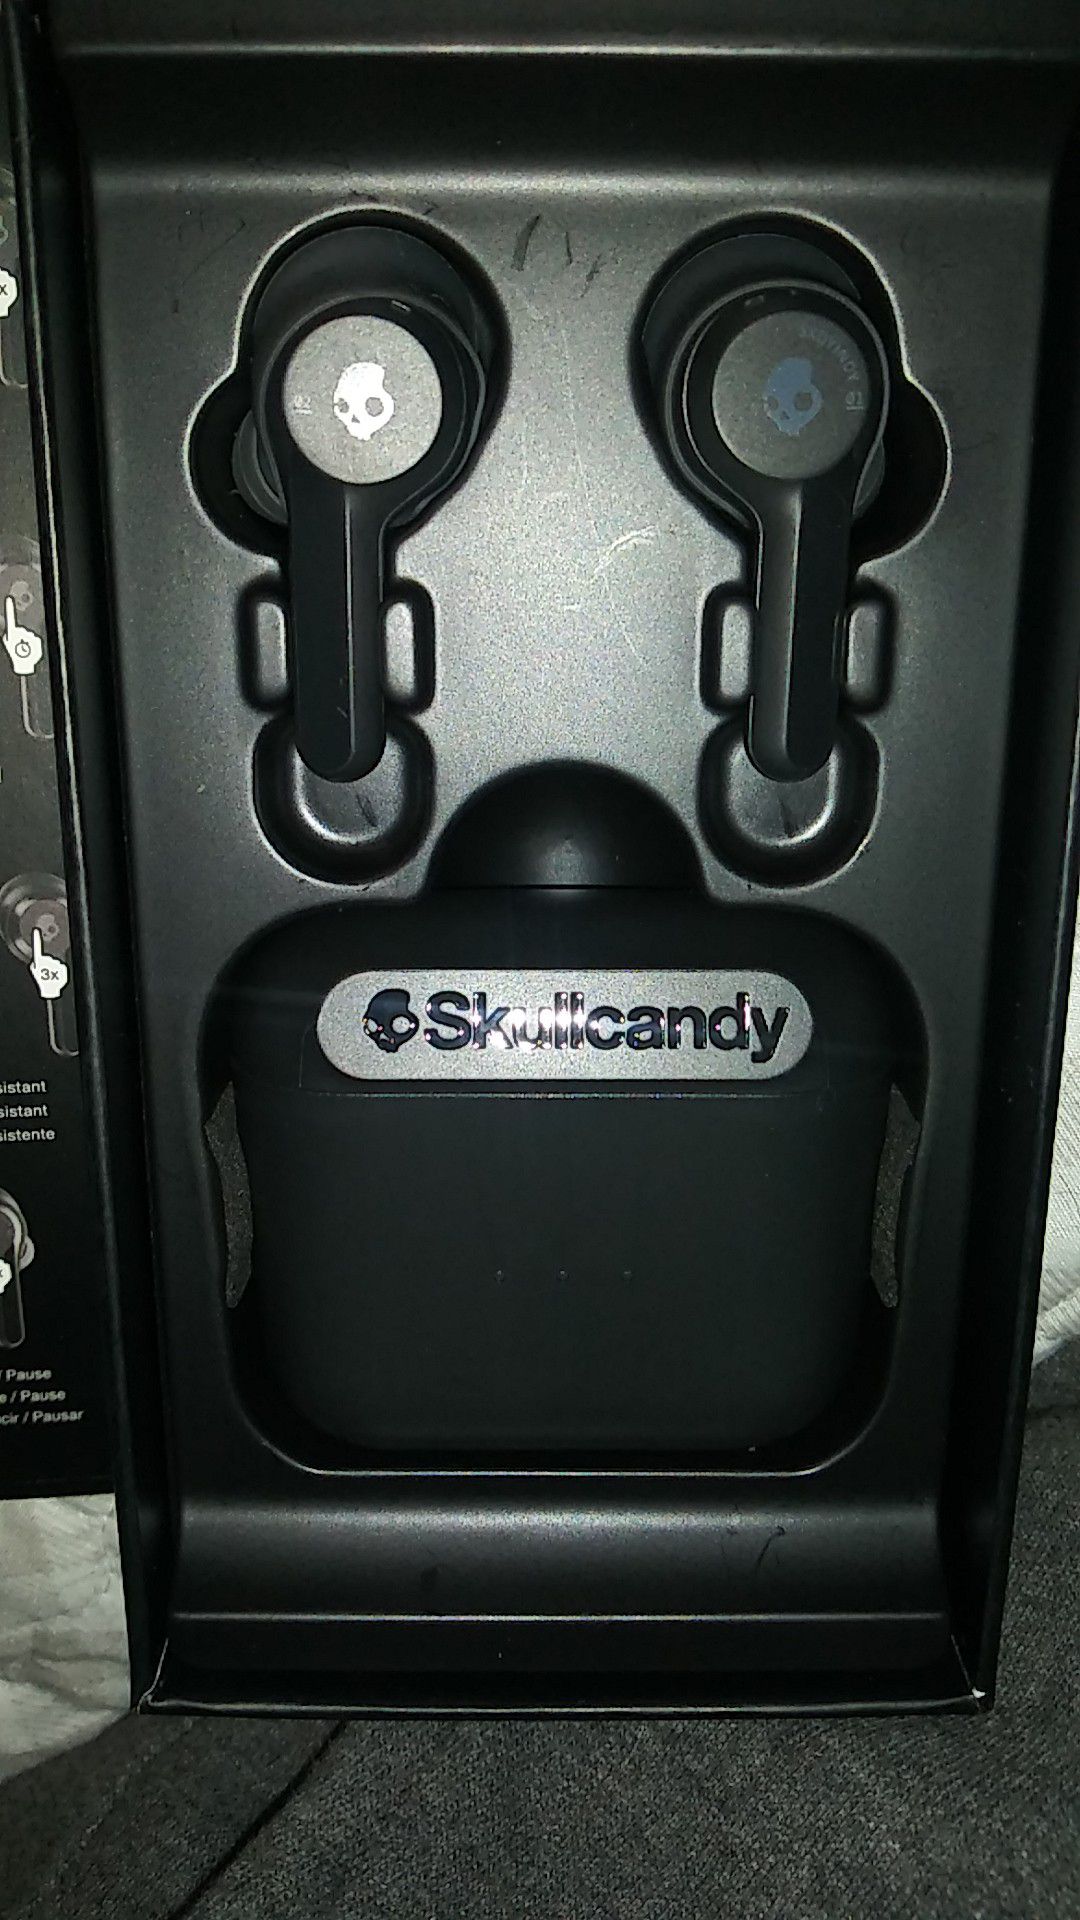 SkullCandy "Indy" bluetooth headphones (brand new still in box, retail $79.99)